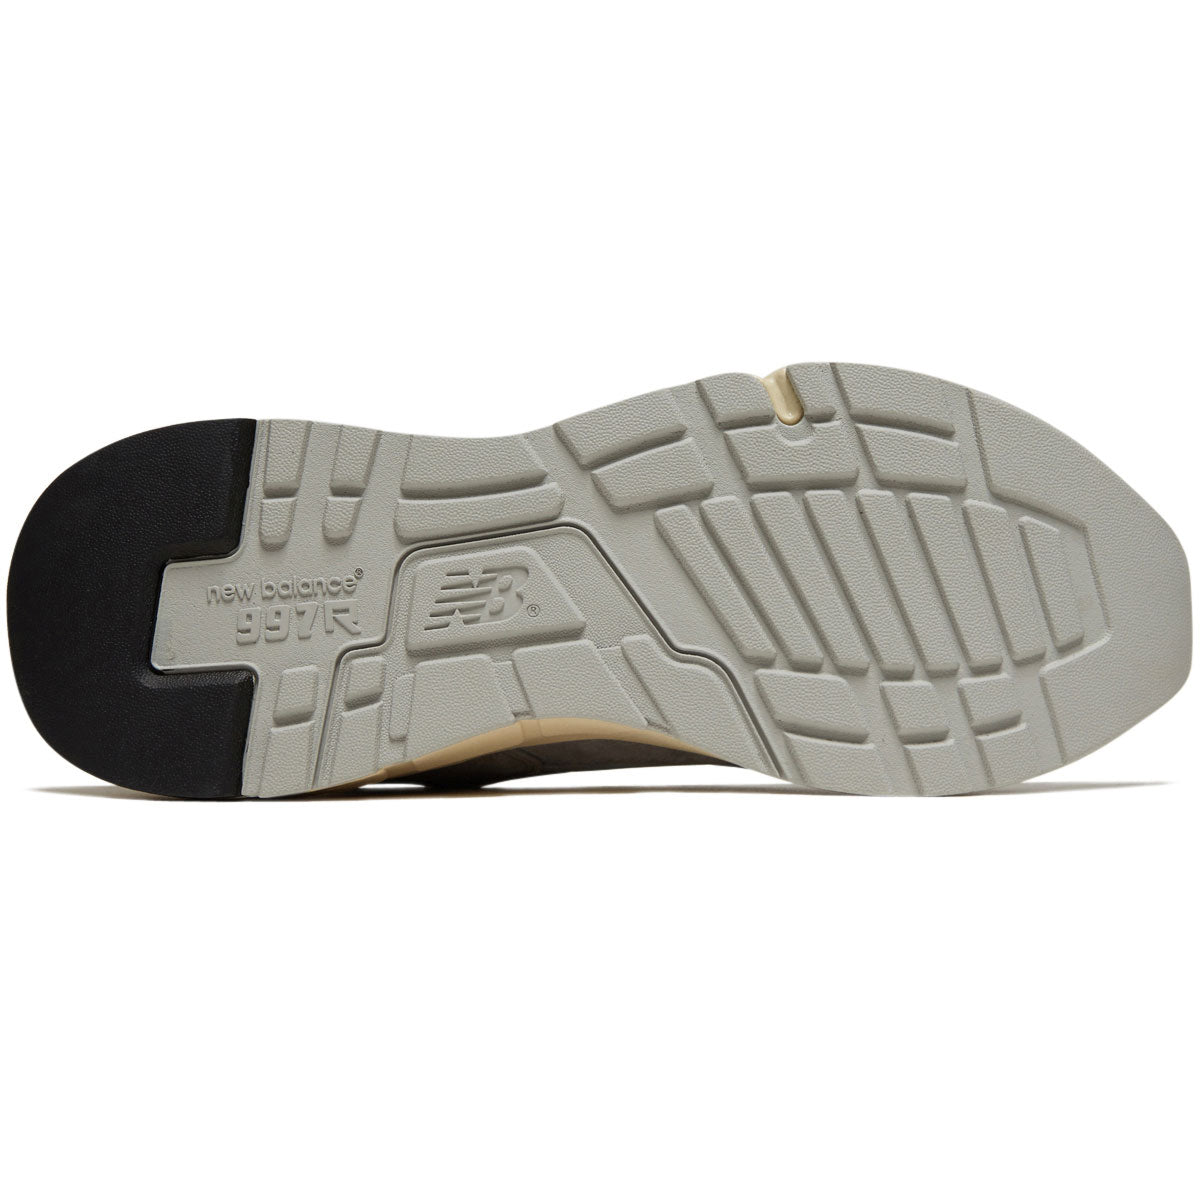 New Balance 997R Shoes - Shadow Grey/Rain Cloud image 4